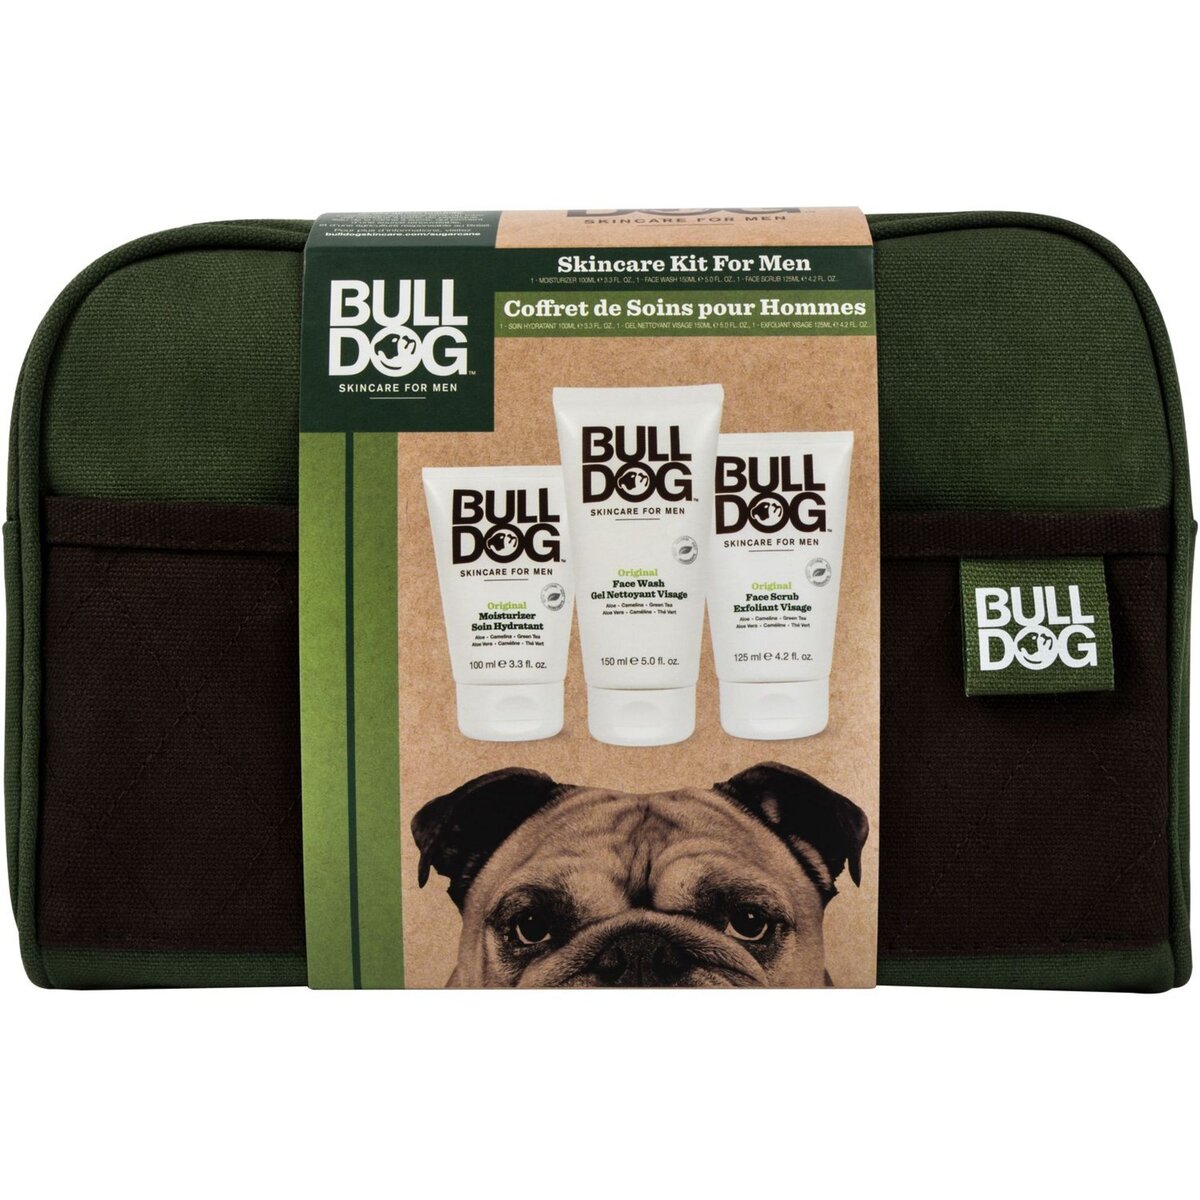 BULLDOG Bulldog Original kit soins homme, gel nettoyant, exfoliant et hydratant 3 produits 1 trousse